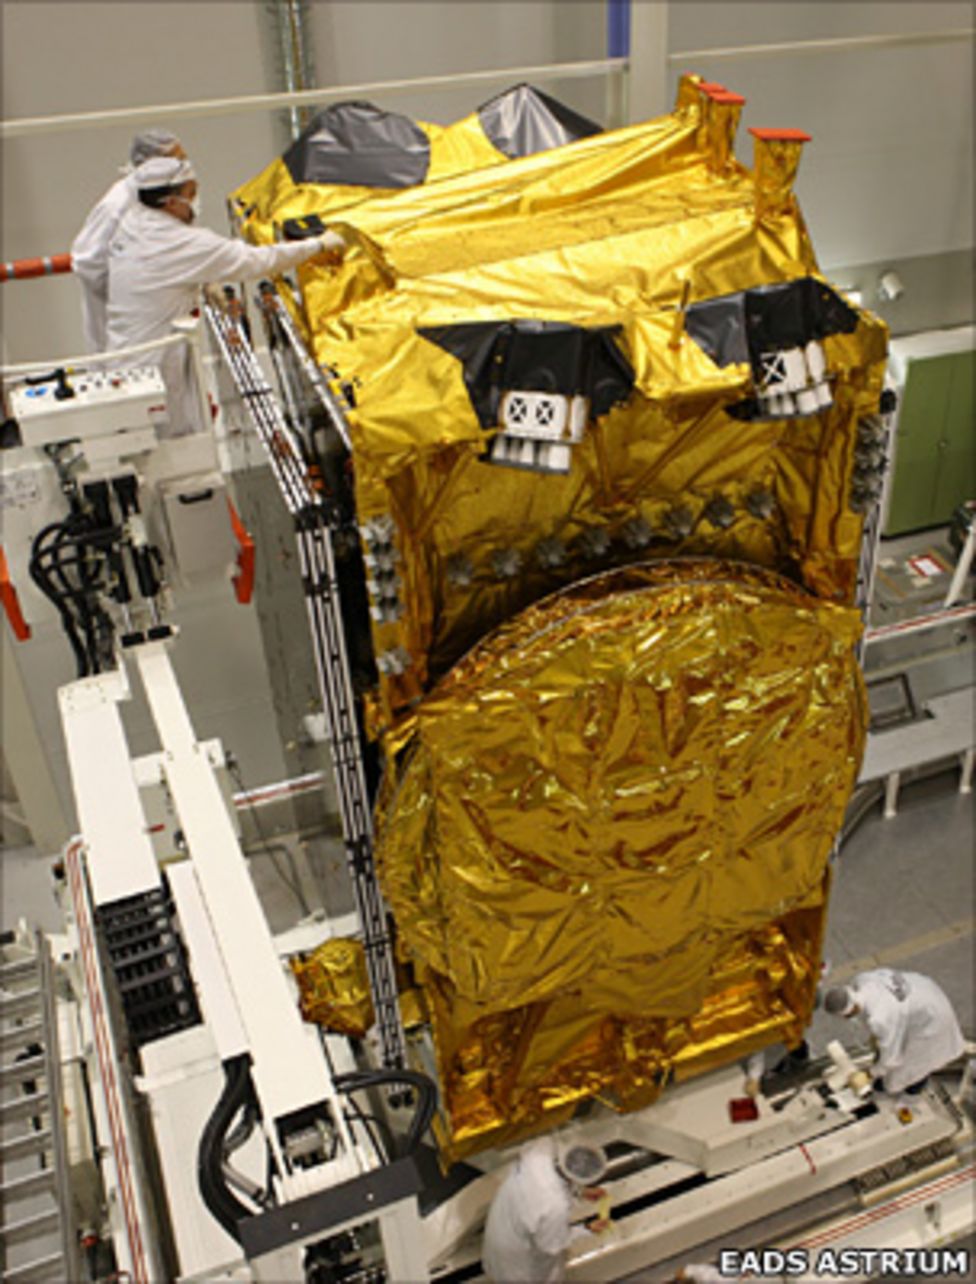 Ka-Sat net-dedicated spacecraft lifts off - BBC News